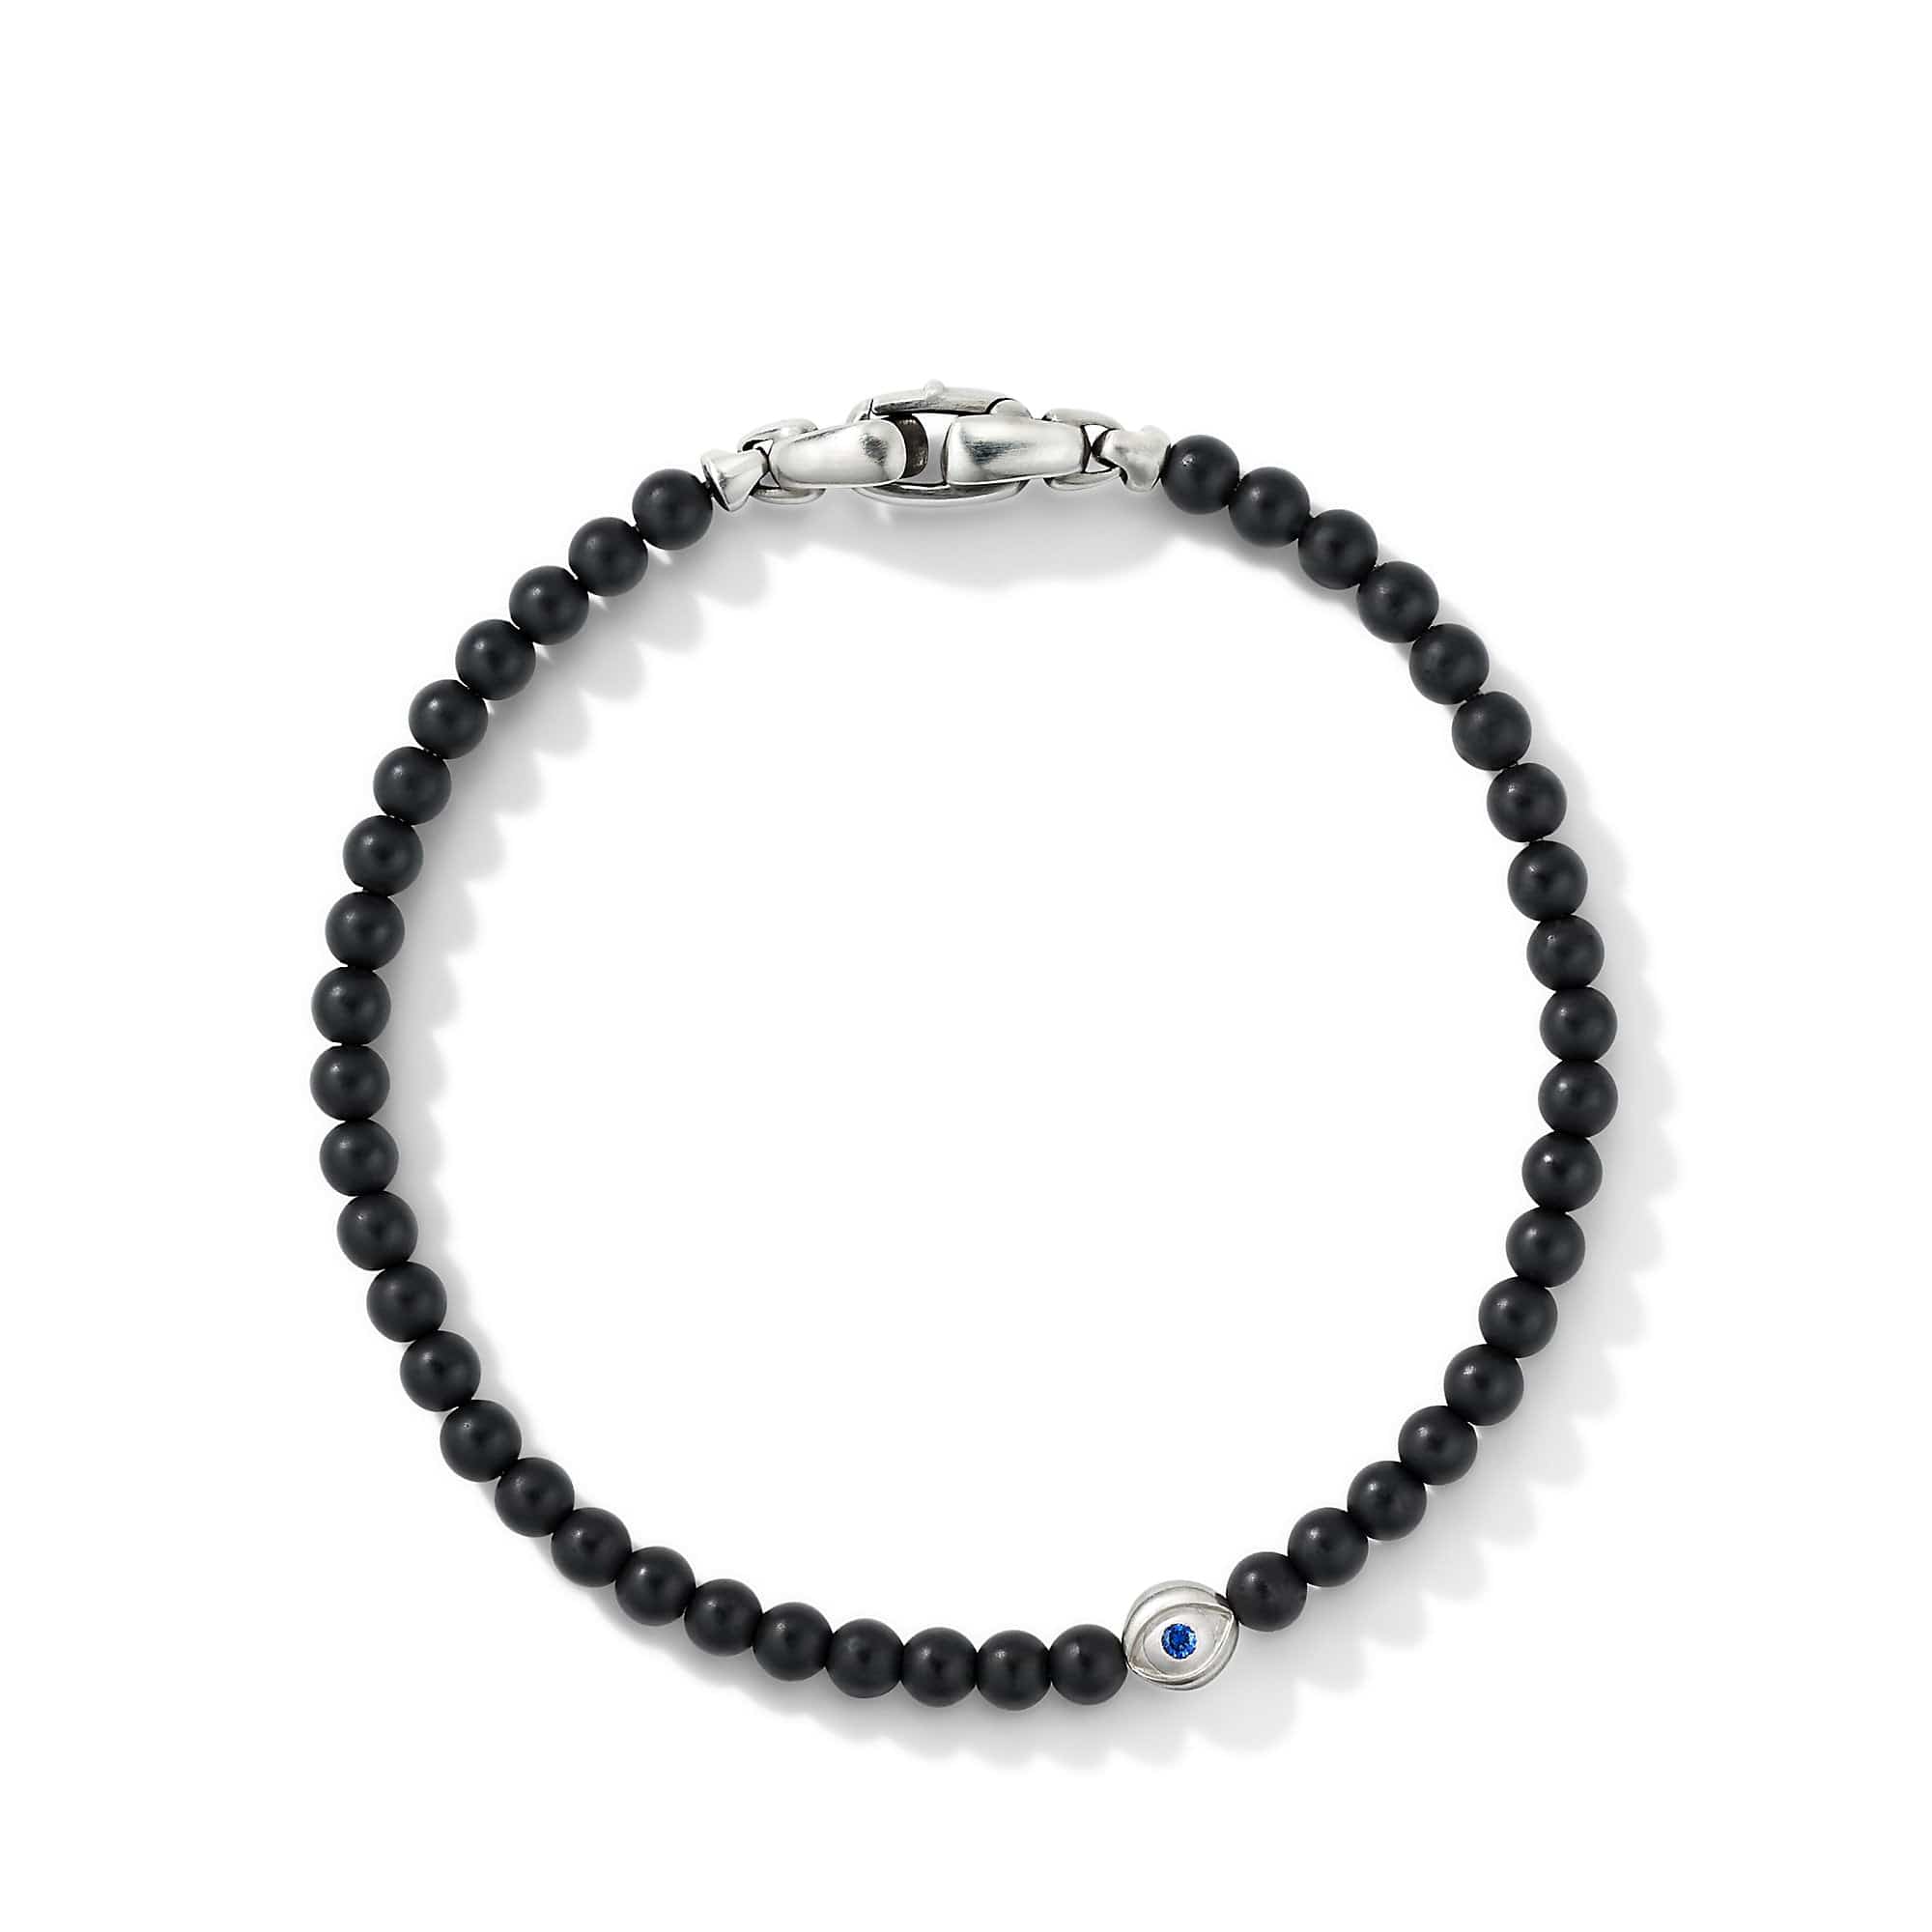 Spiritual Beads Evil Eye Bracelet with Black Onyx and Sapphires, Long's Jewelers